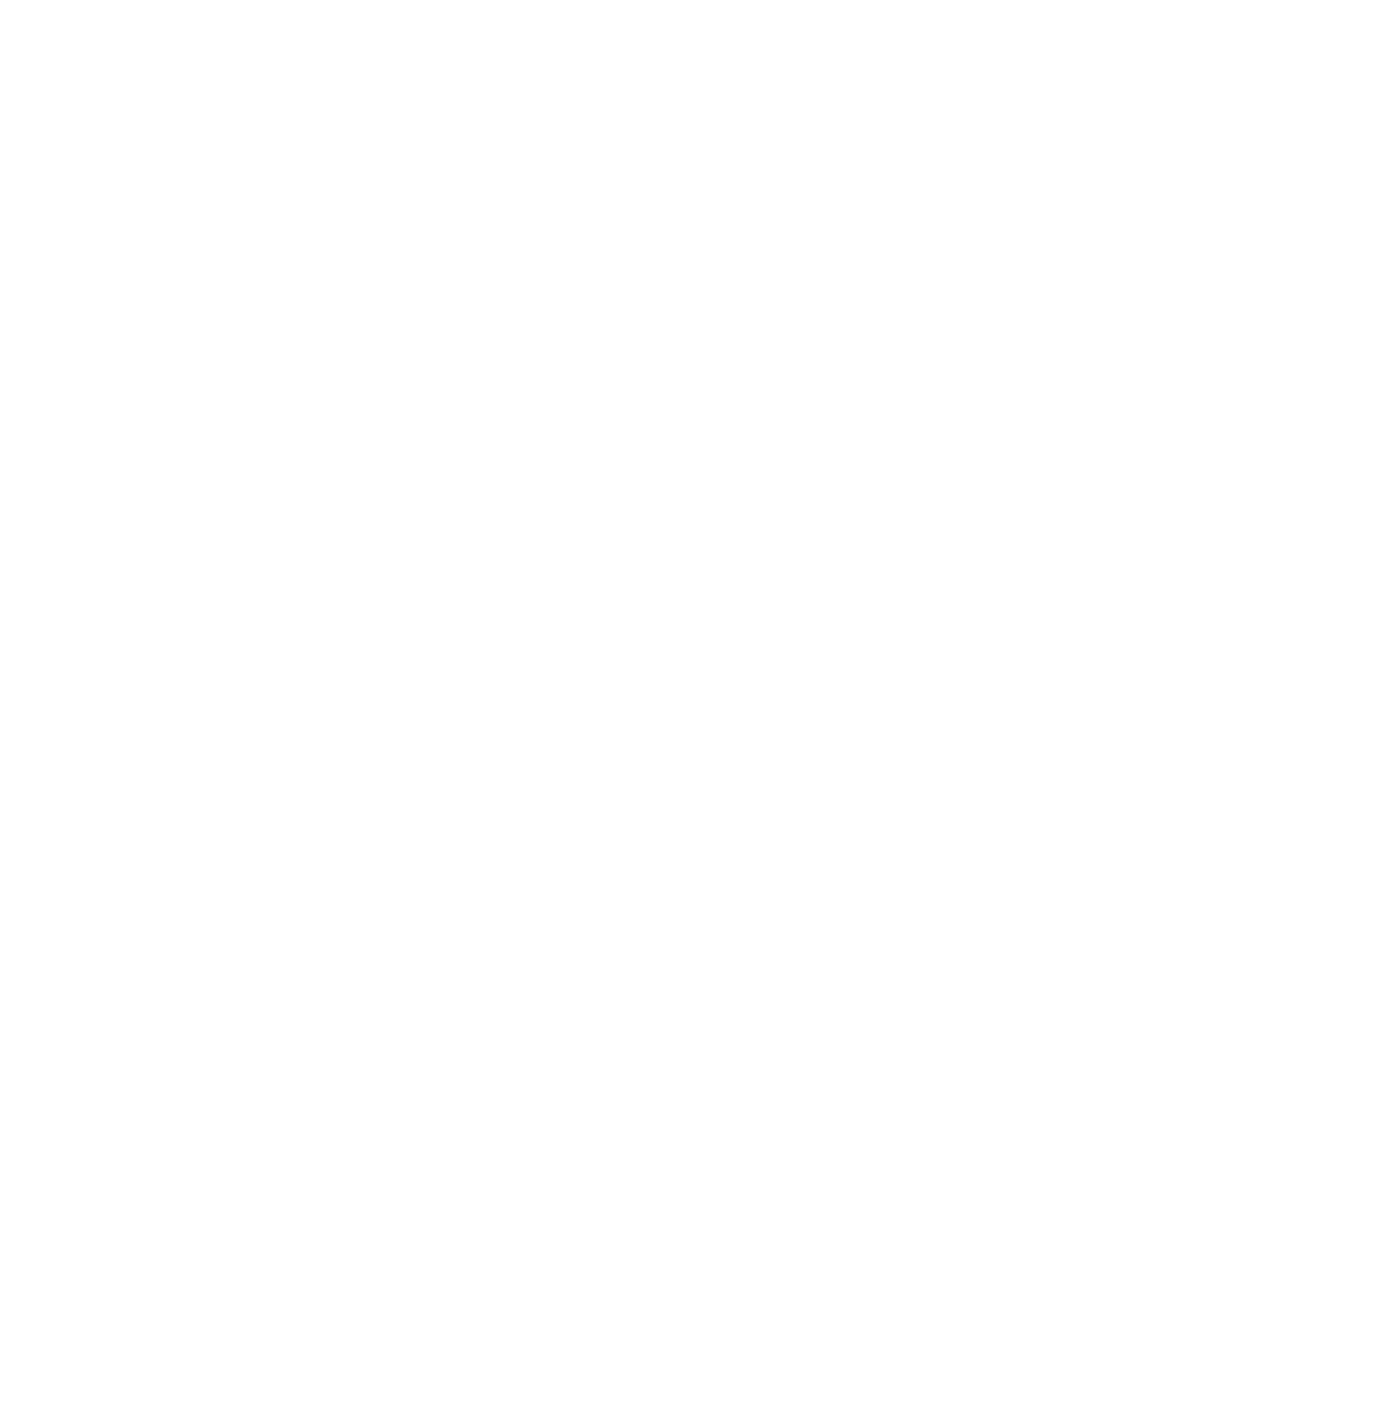 ogwood logo